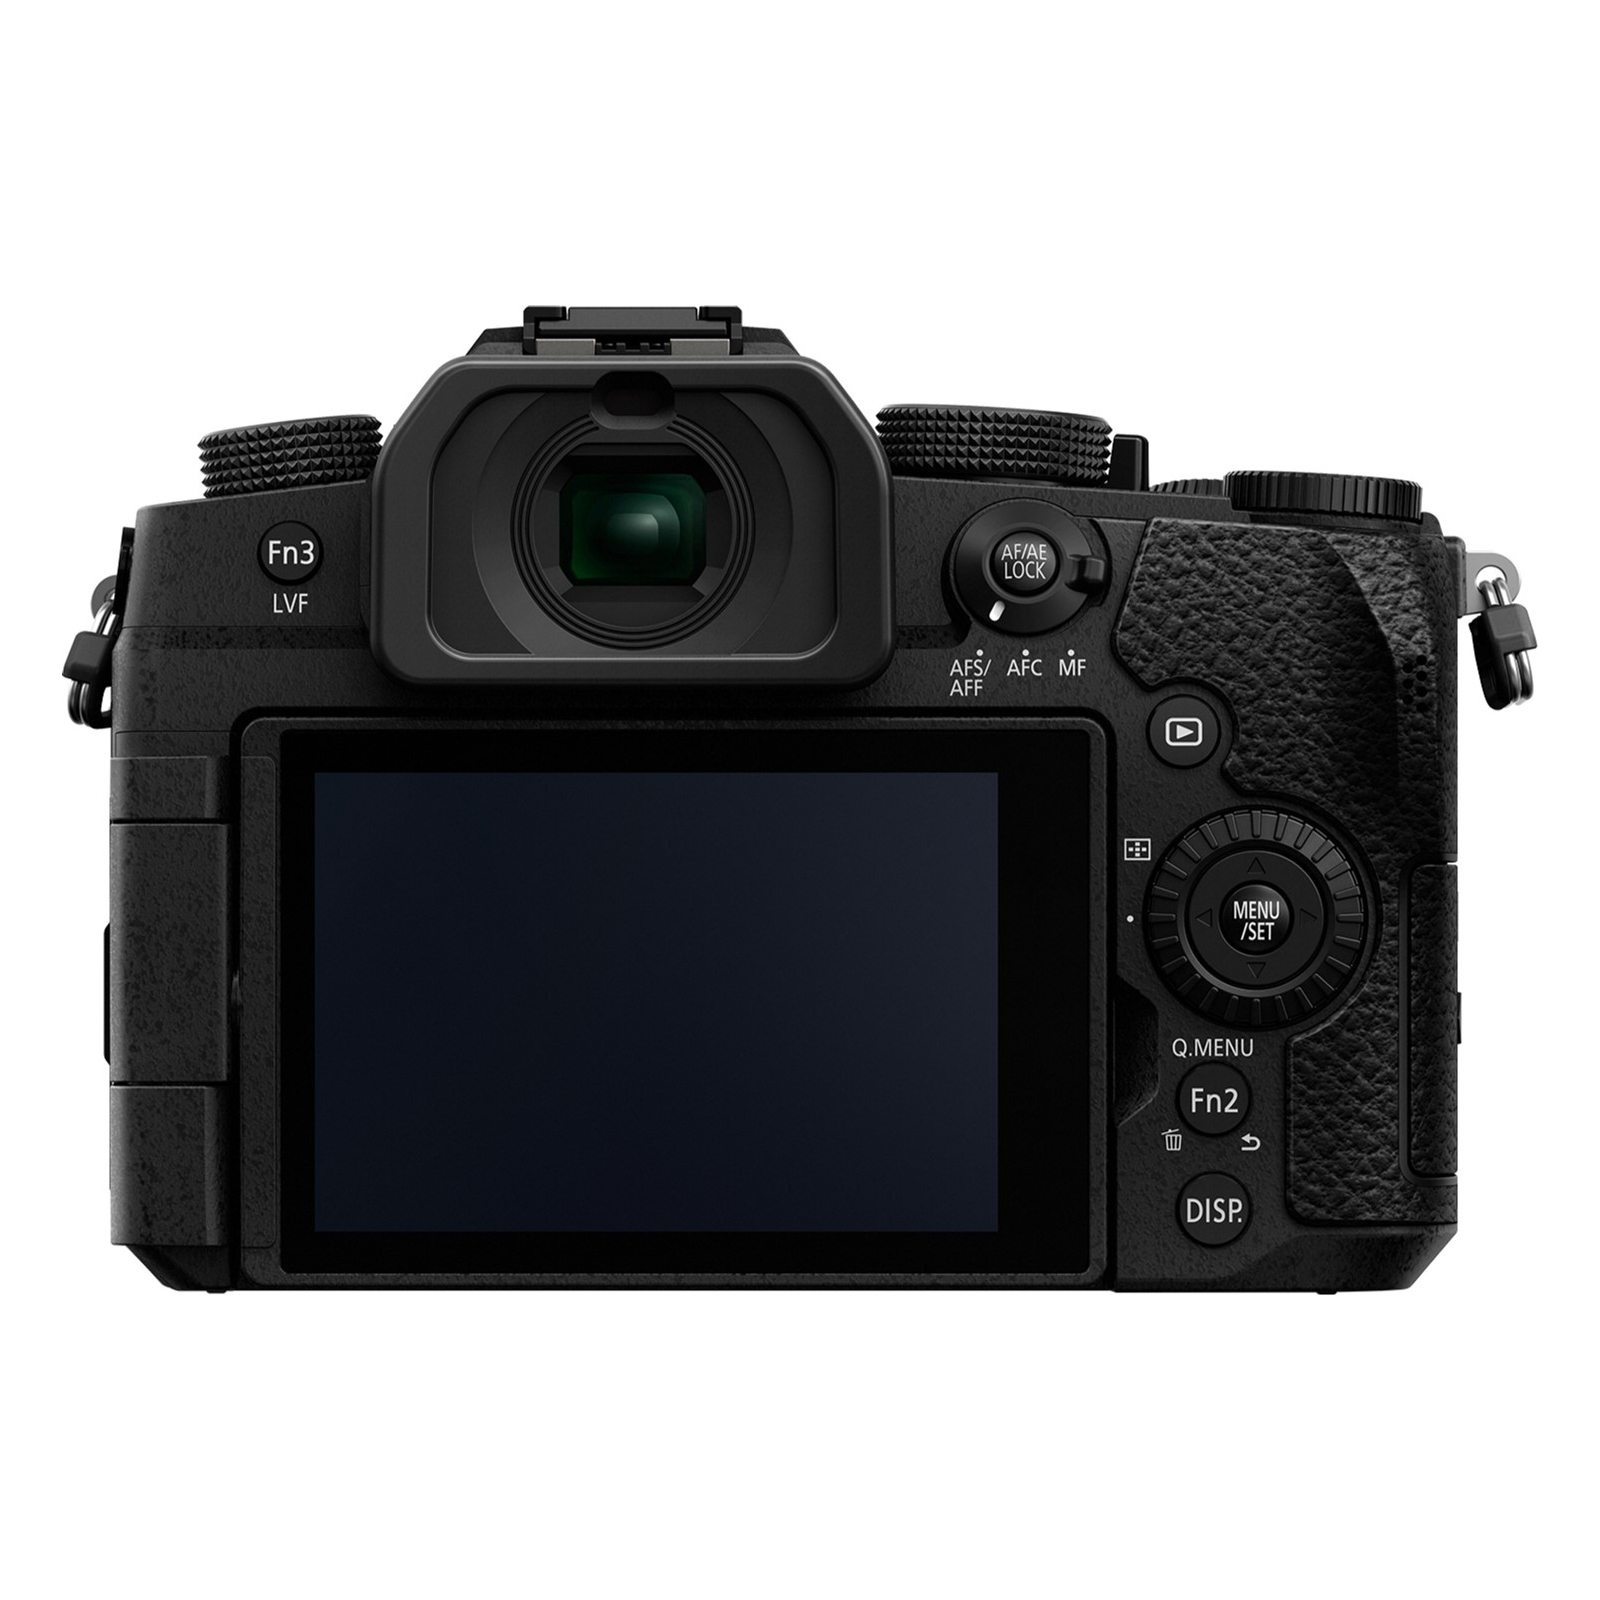 Цифровой фотоаппарат Panasonic DC-G90 Kit 12-60mm Black (DC-G90MEE-K) изображение 3